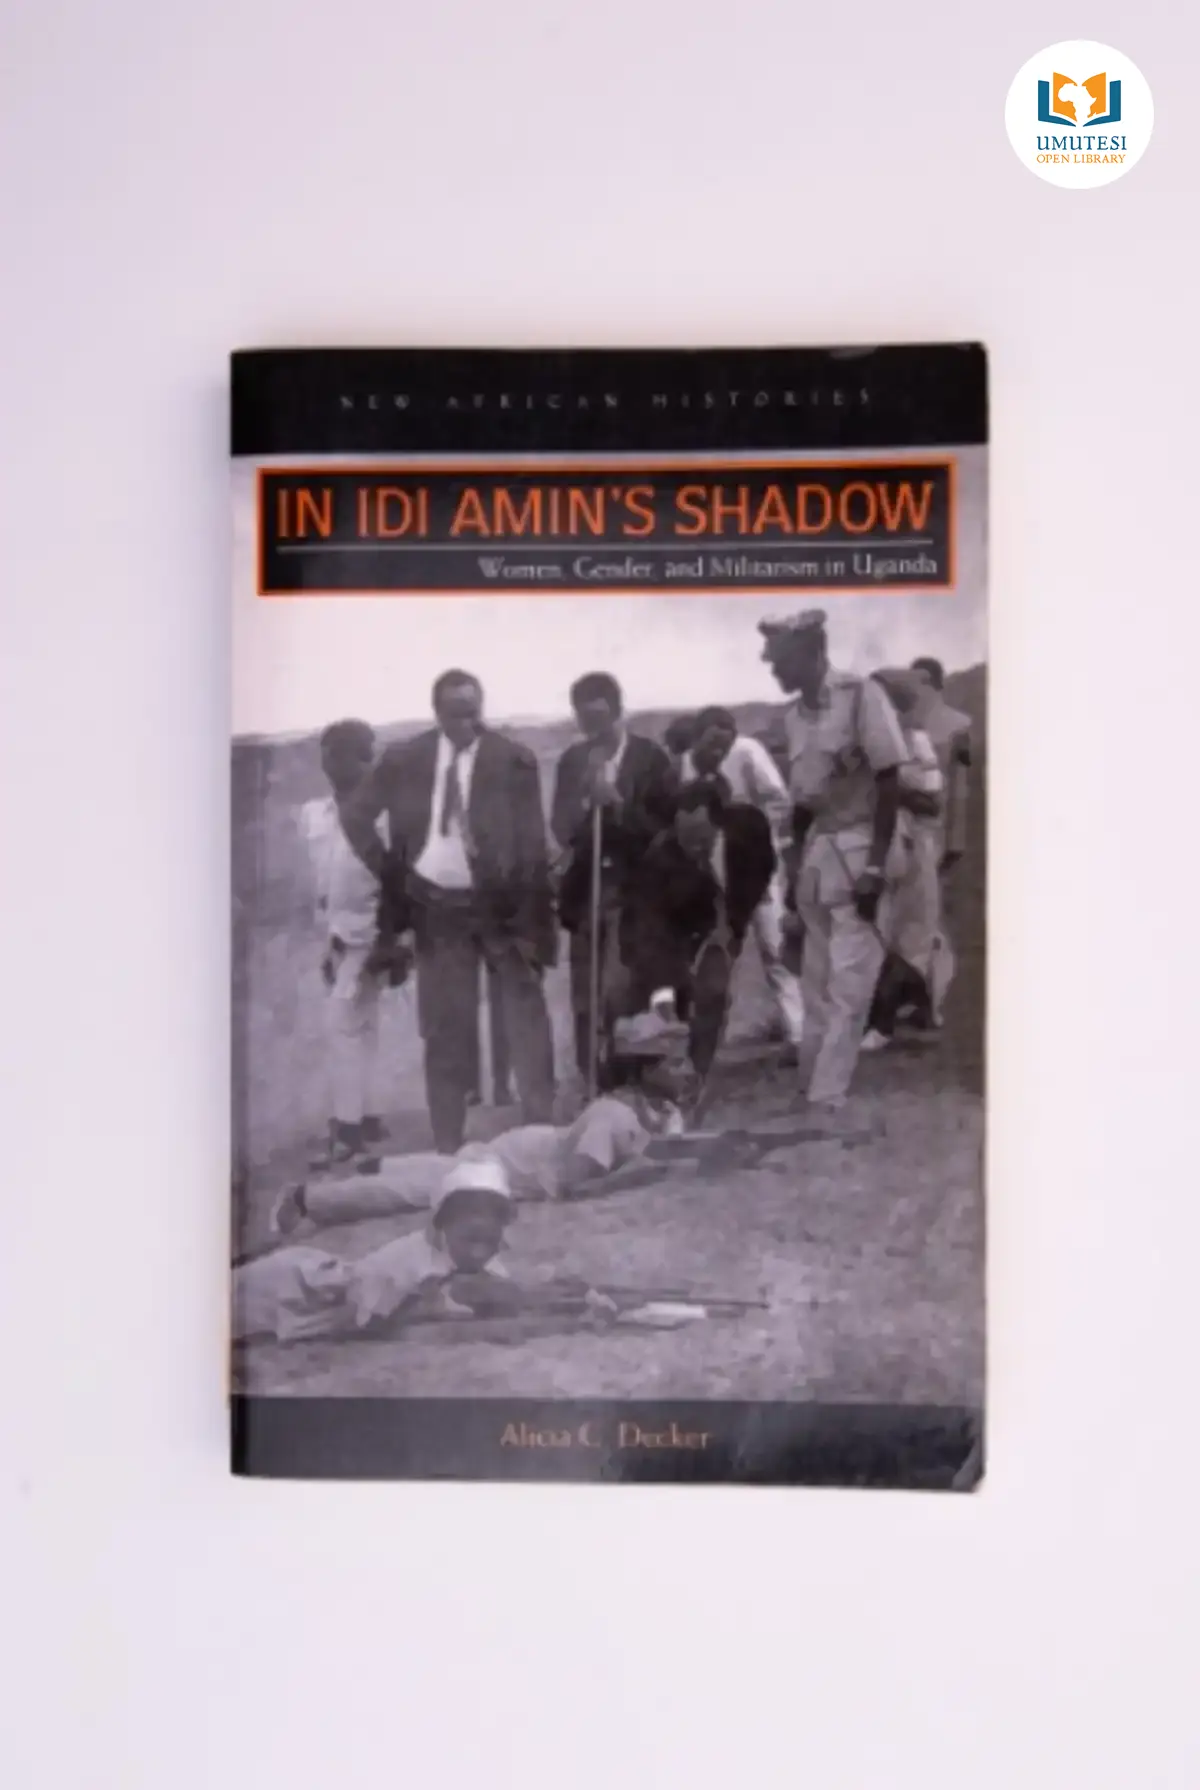 In Idi Amin’s Shadow: Women, Gender, and Militarism in Uganda by Alicia C. Decker